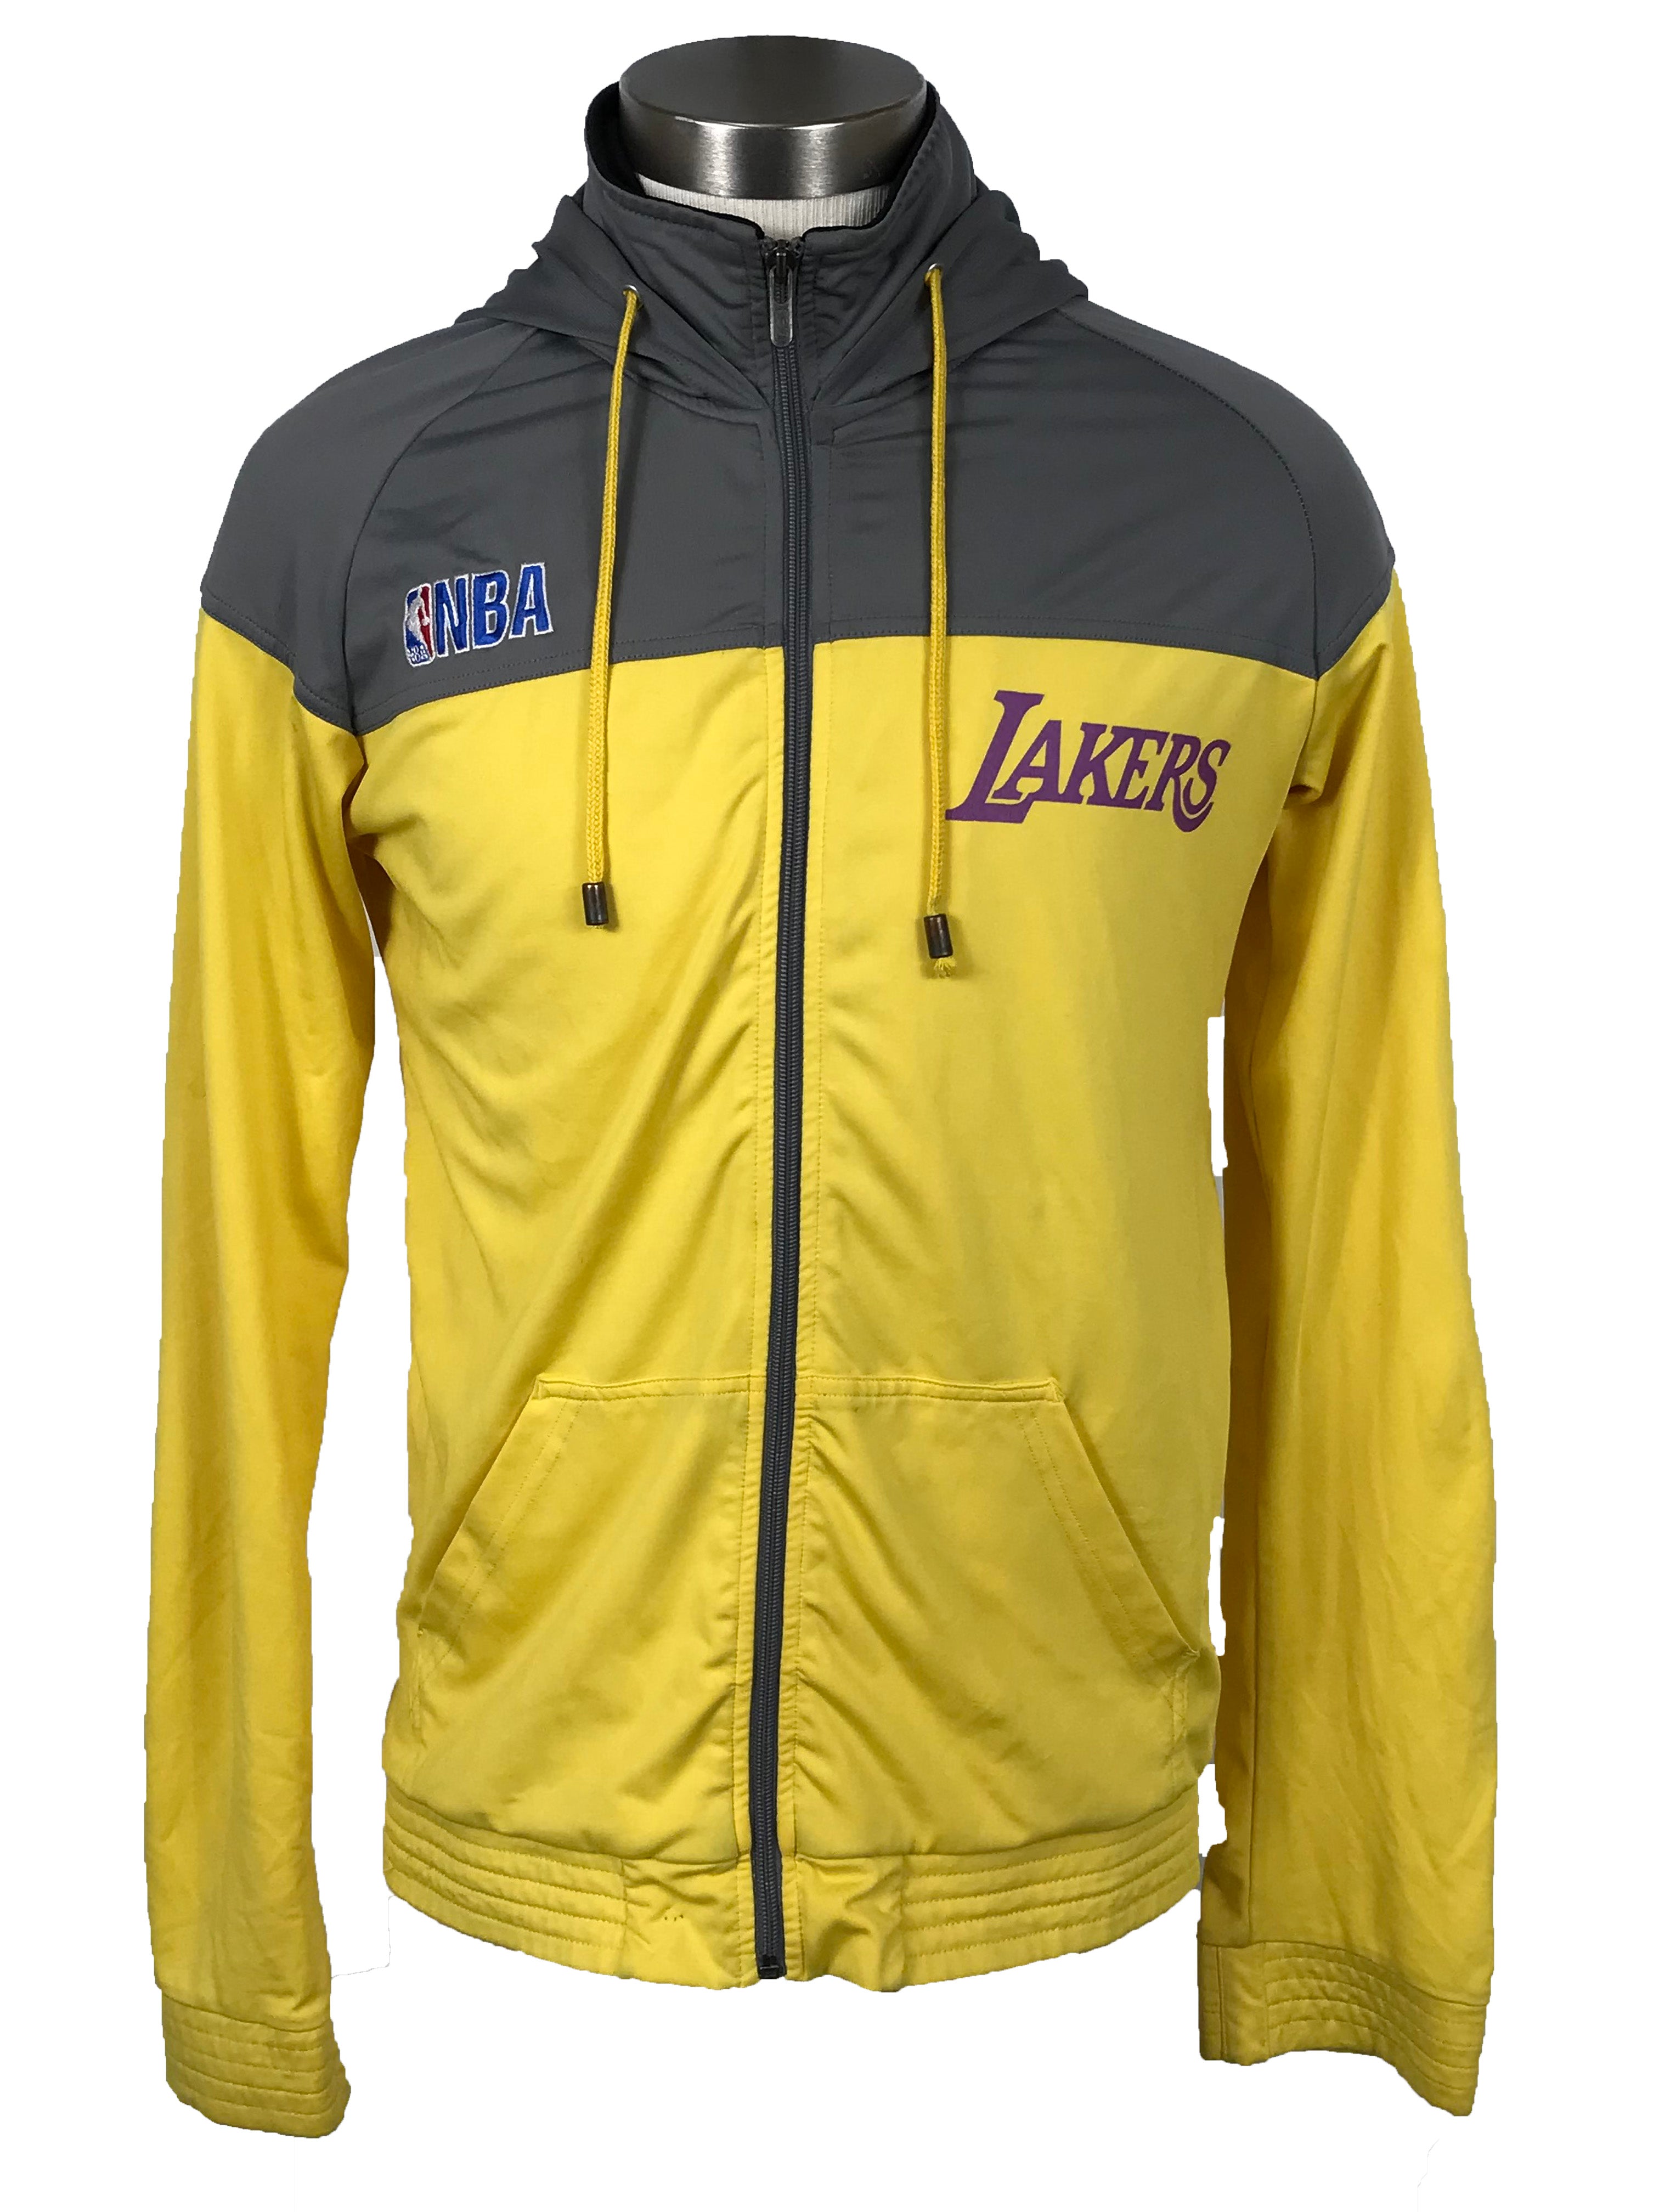 NBA Lakers Zip-Up Jacket Men's Size M – MSU Surplus Store